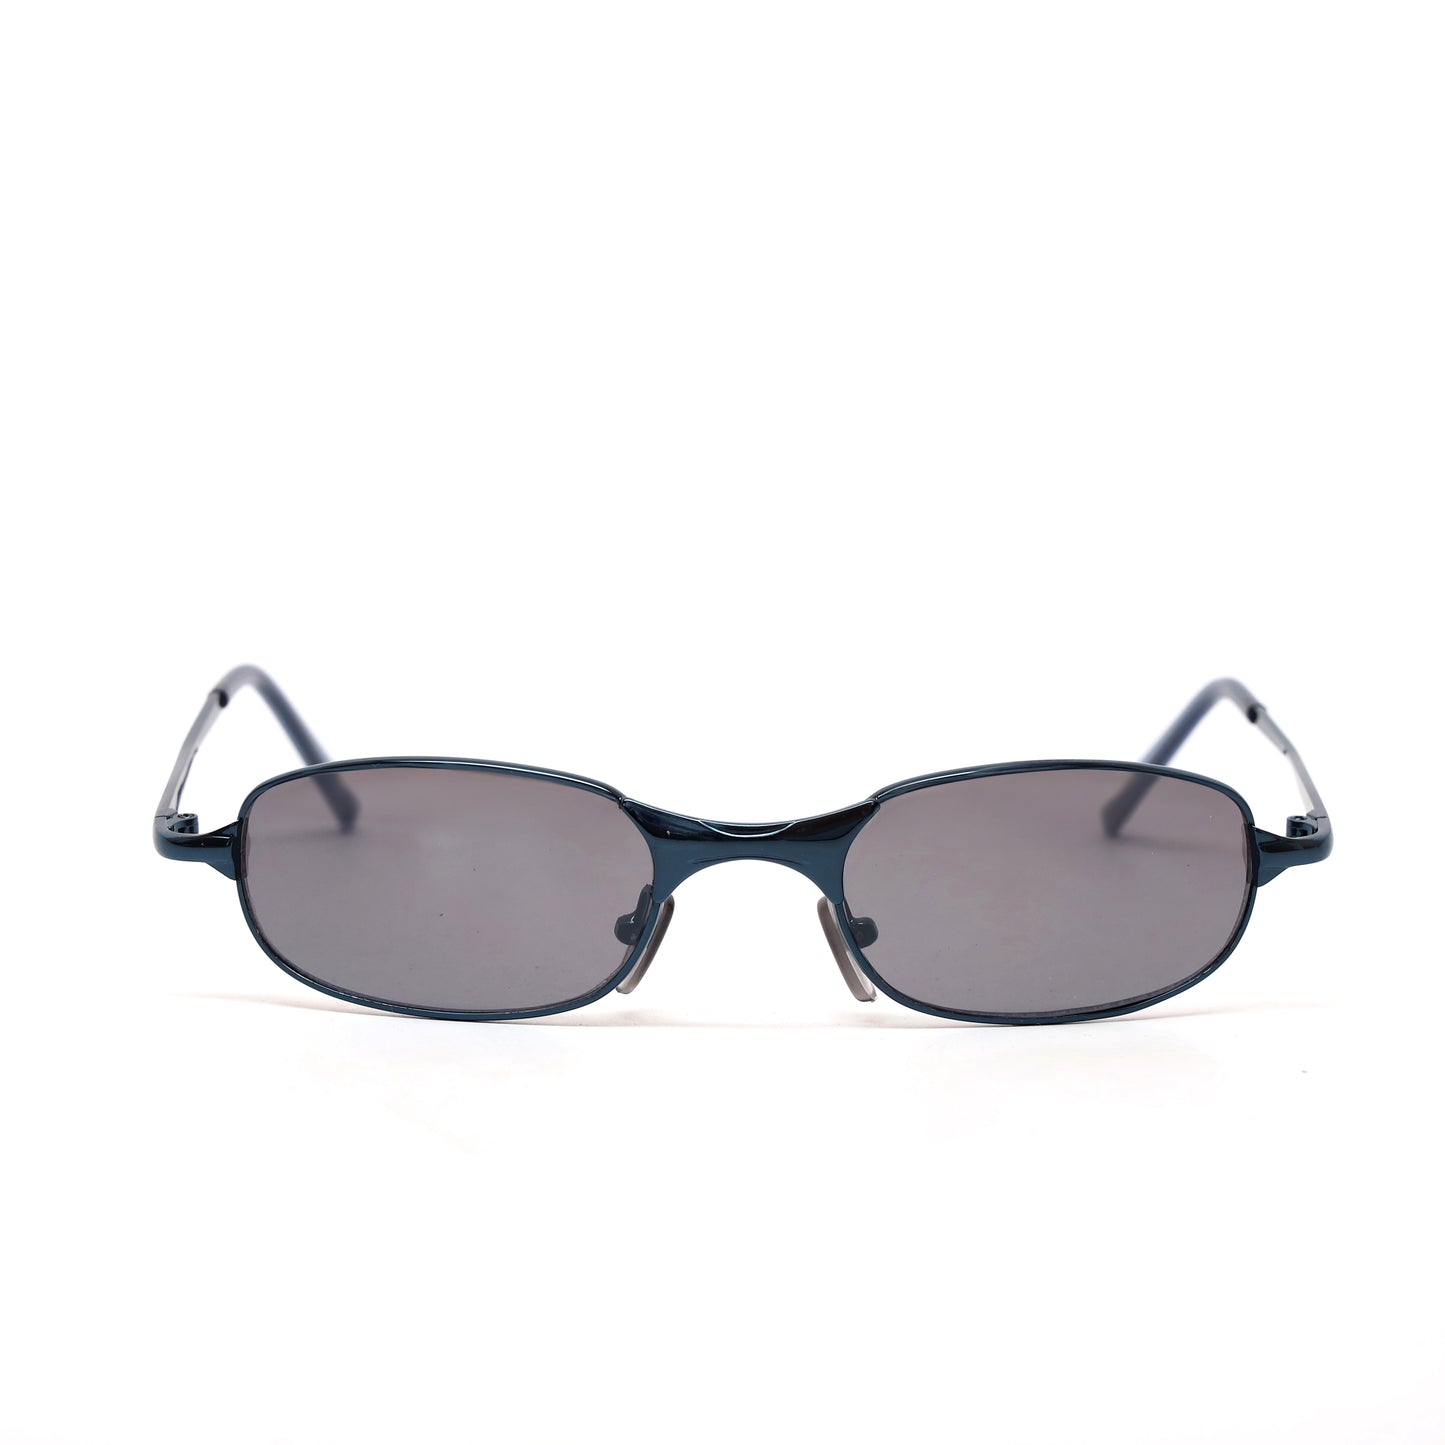 Vintage Small Size 90s Matrix Style Sunglasses - Gradient